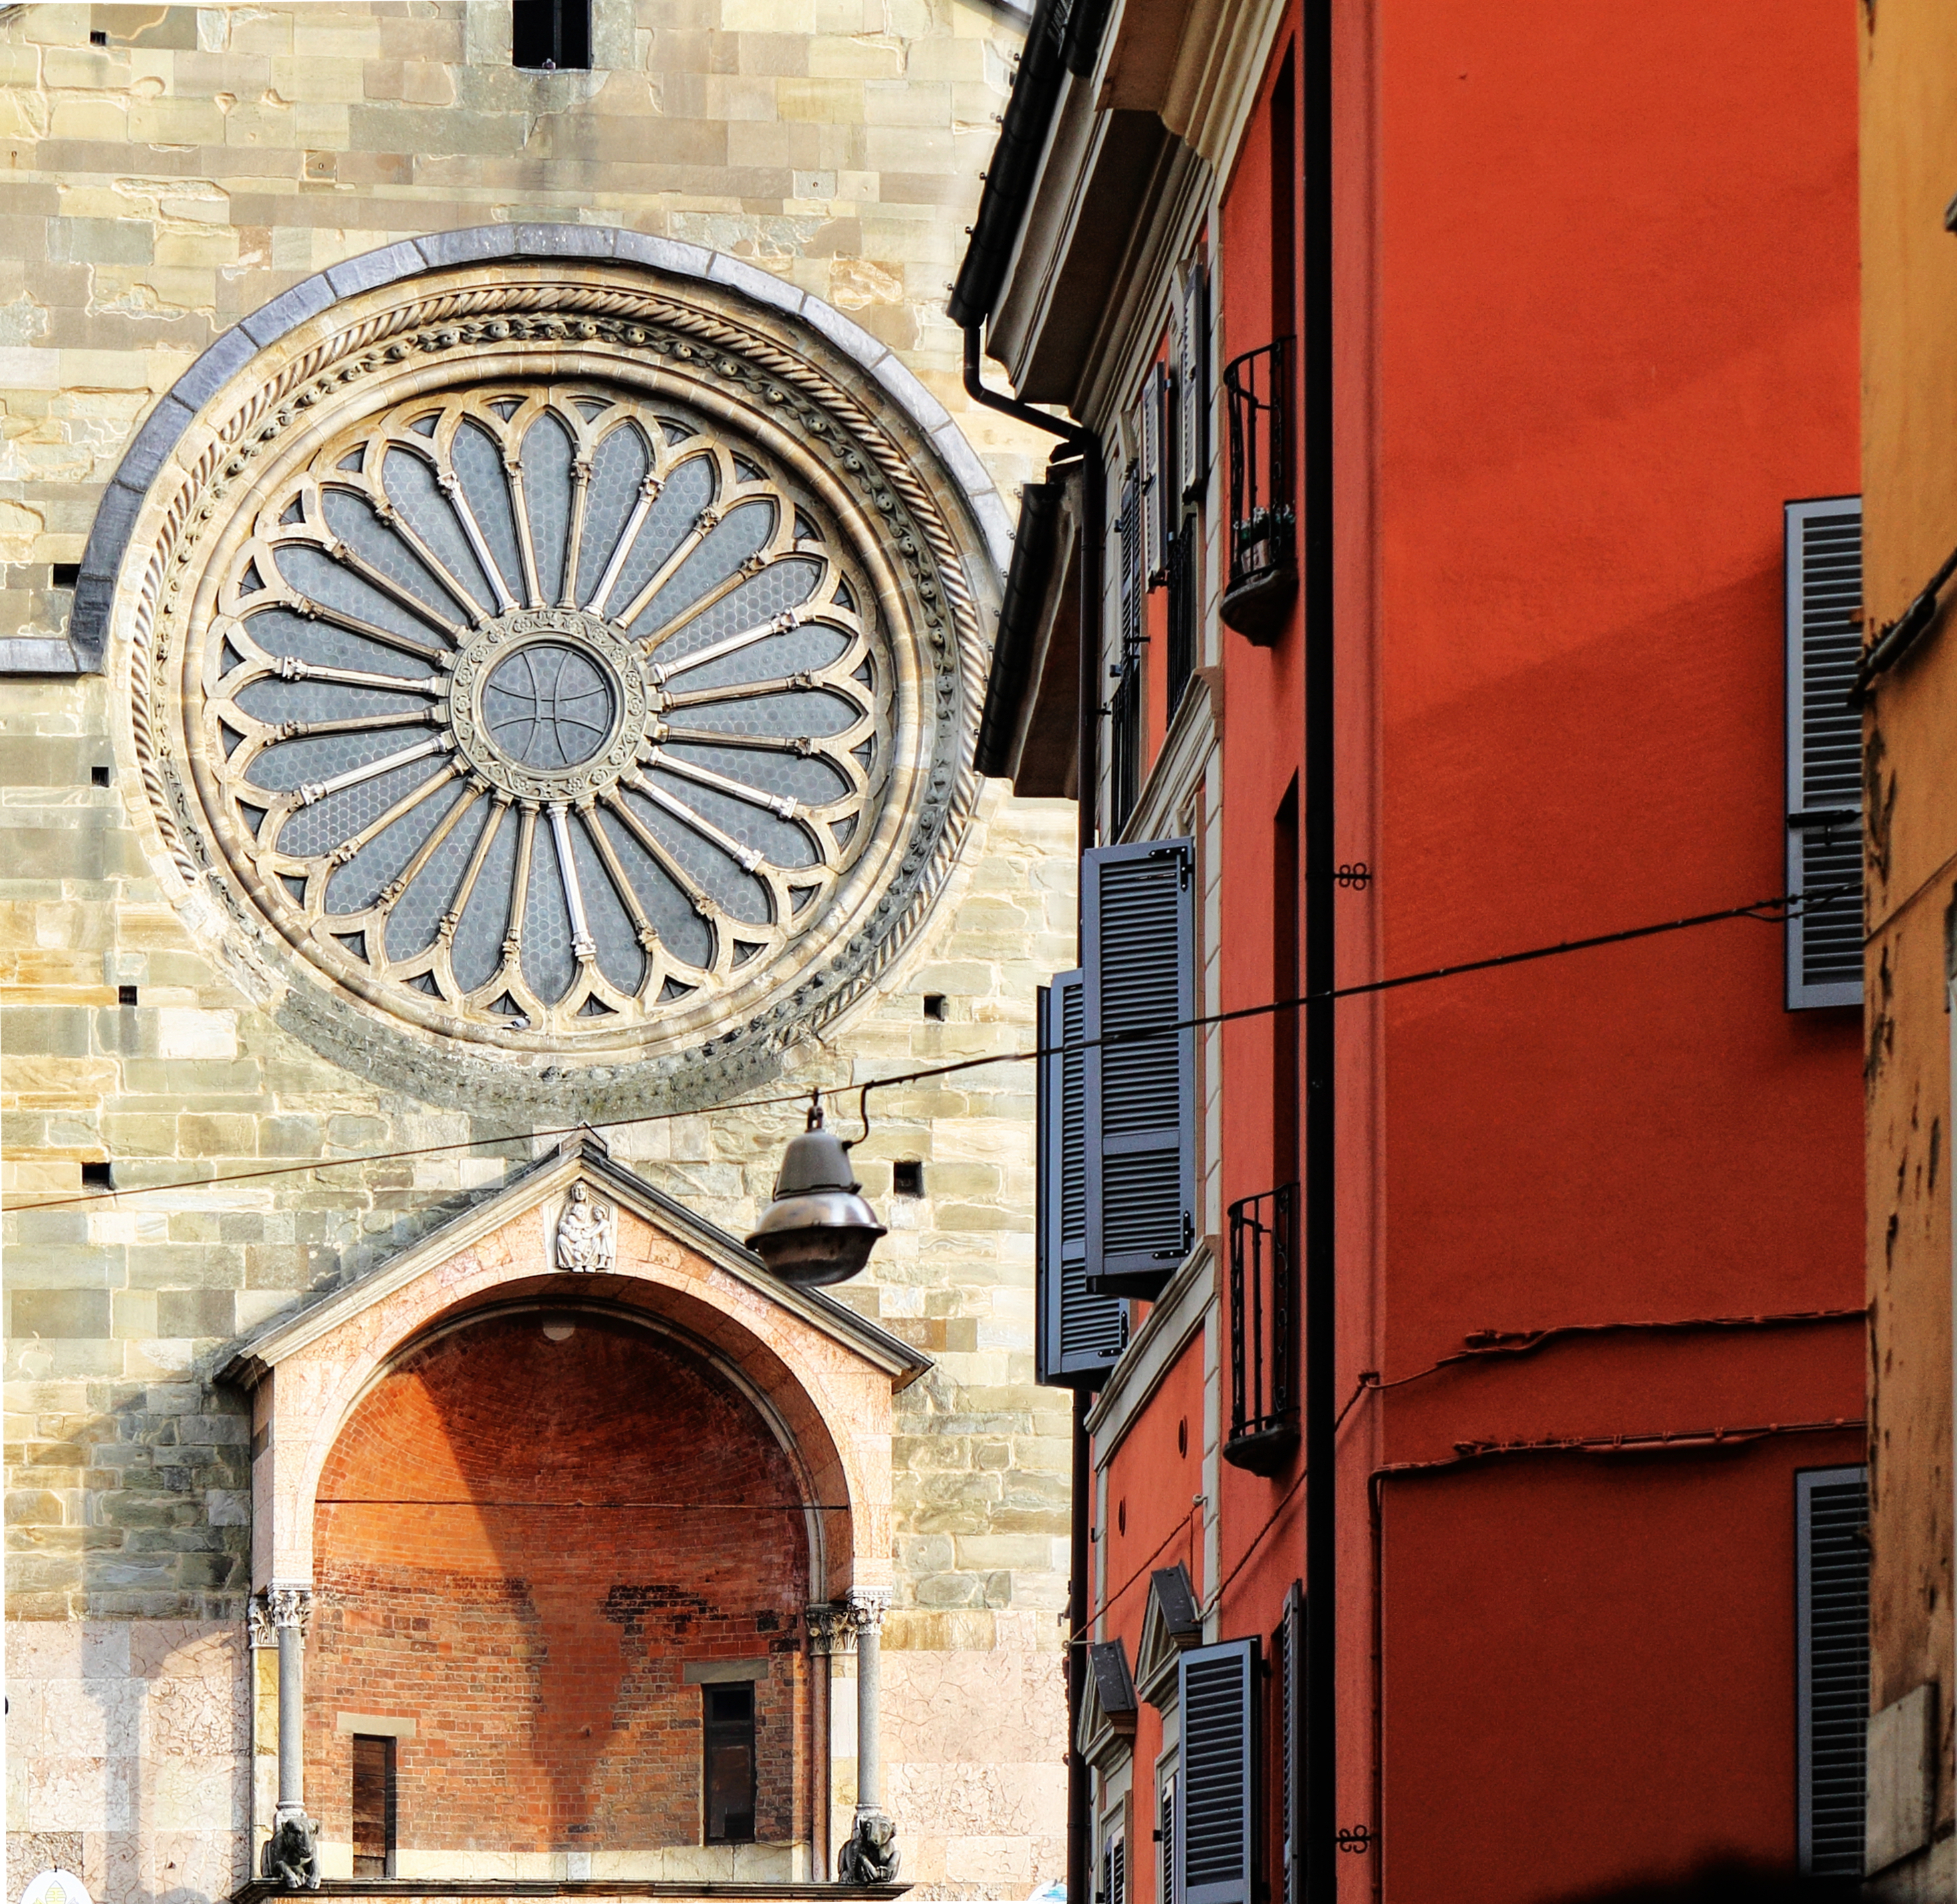 photo: https://upload.wikimedia.org/wikipedia/commons/b/b2/Il_Duomo_di_Piacenza_.jpg